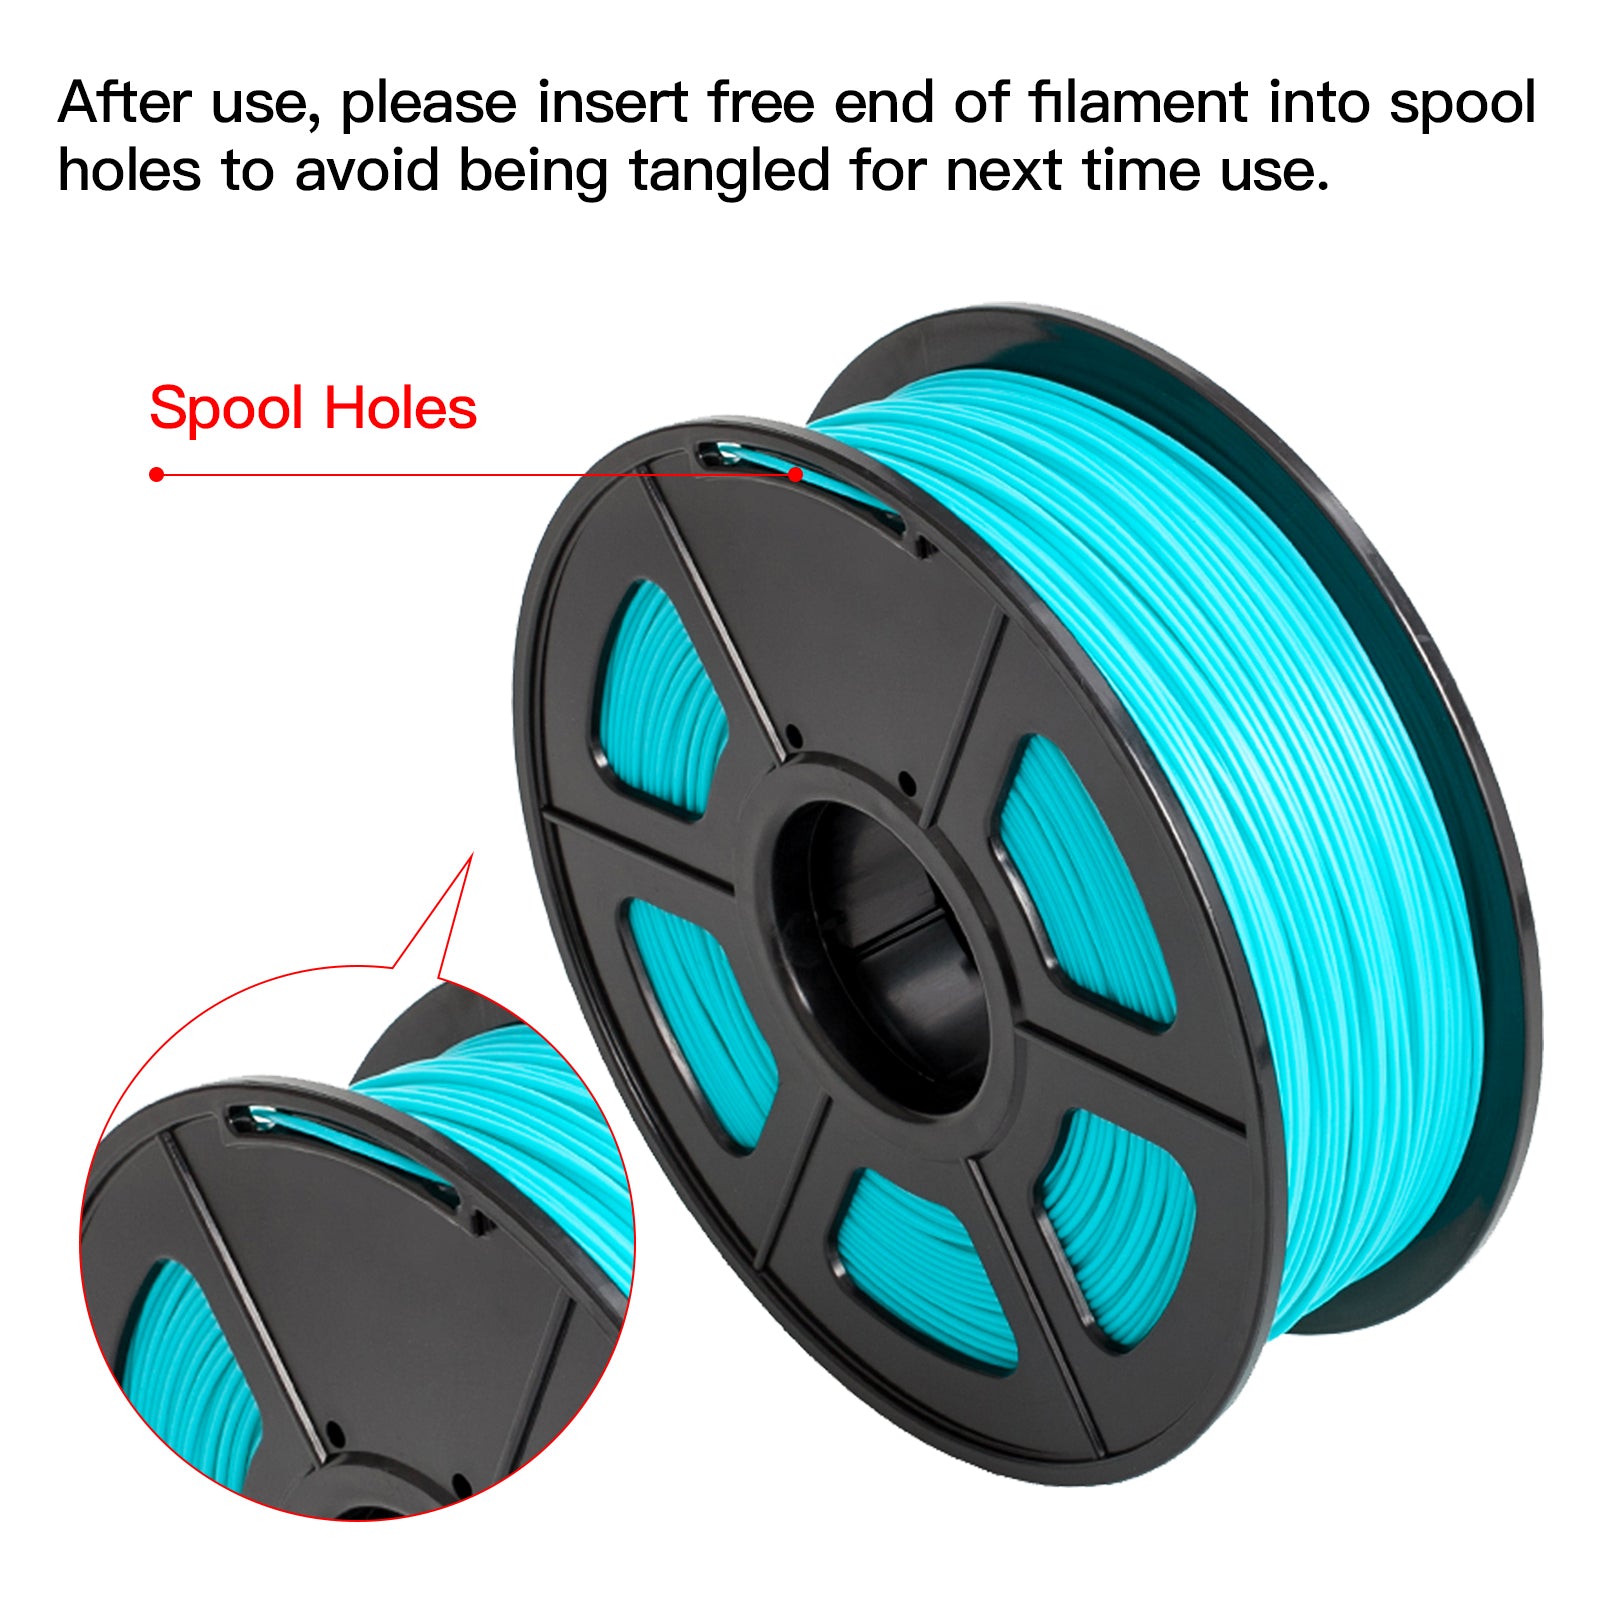 1kg Spool SUNLU PLA 3D Printer Filament 1.75mm diameter printing consumables for most FDM 3d Printers, Fuchsia or Yellow